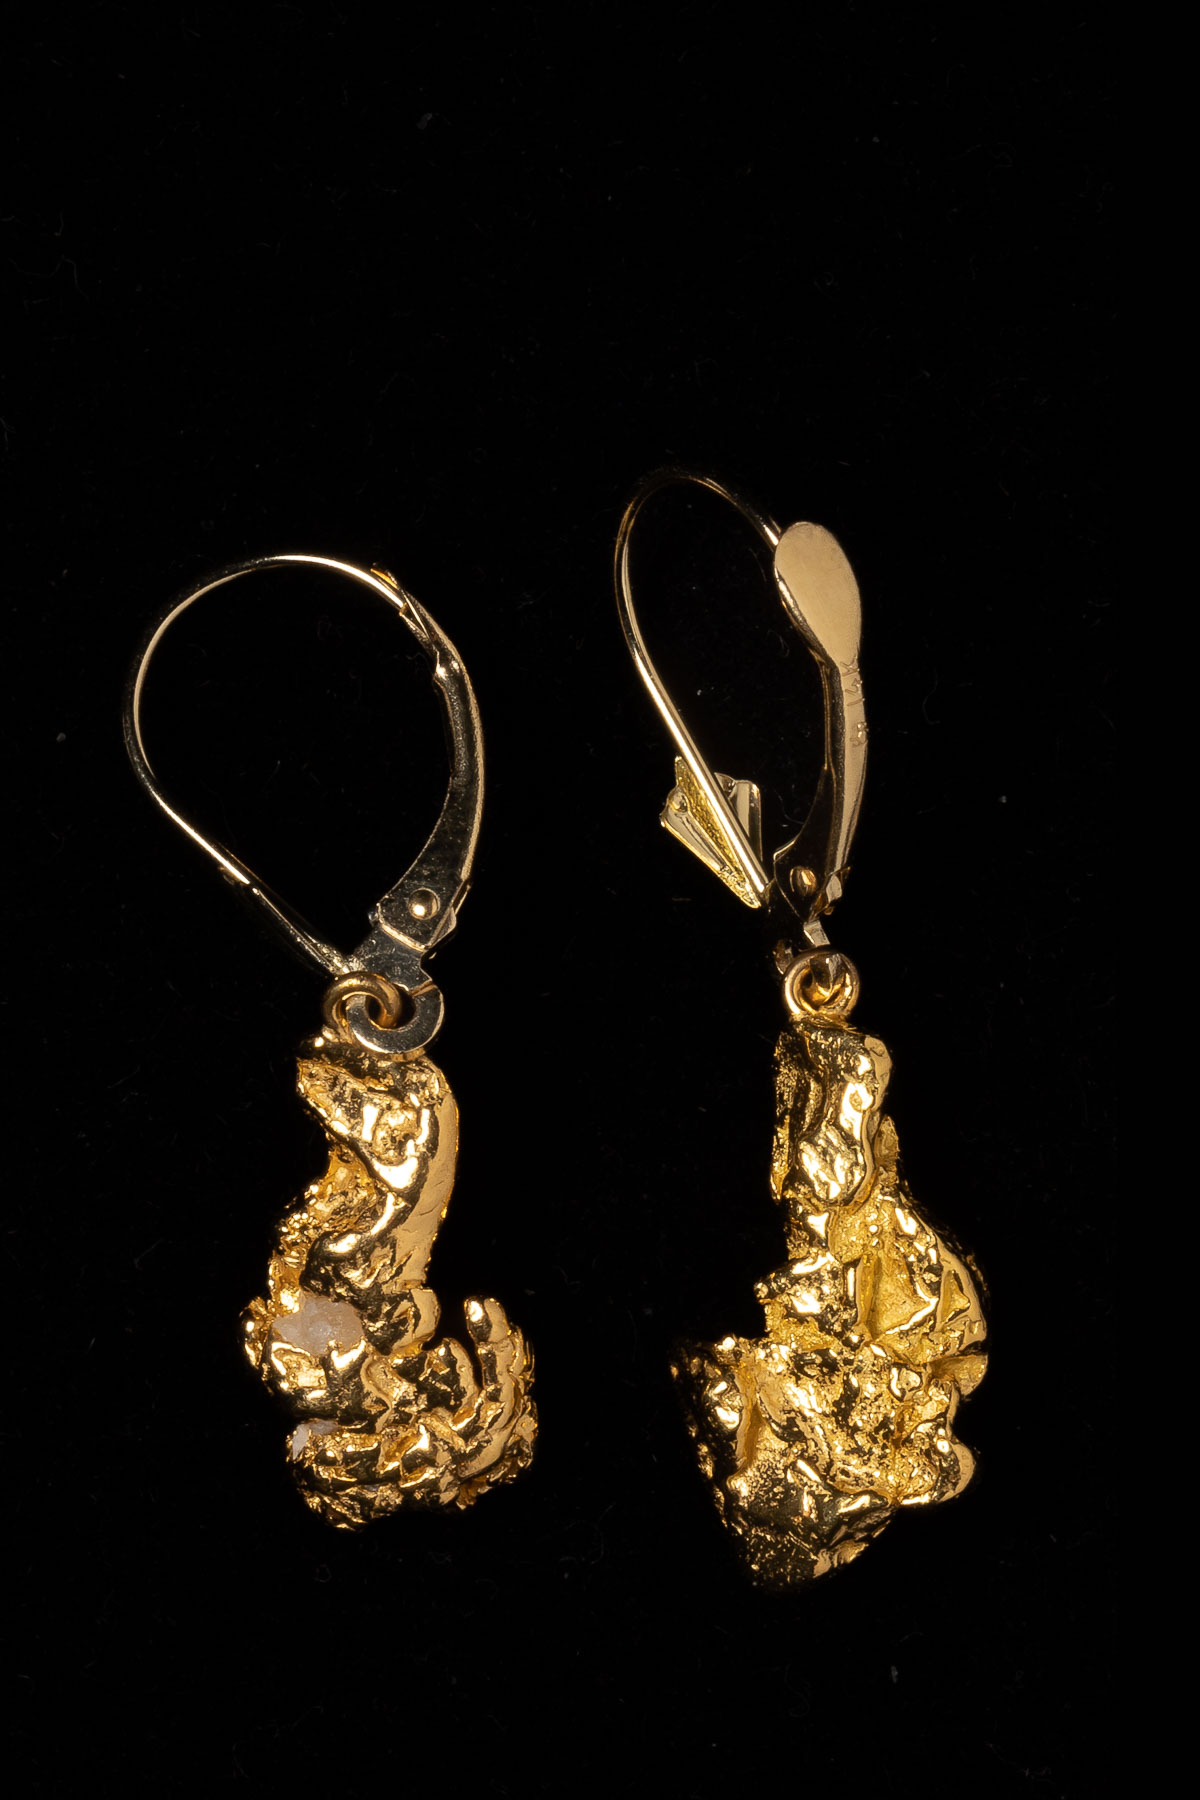 Interesting Pairing Alaska Natural Gold Nugget Earrings - 5.33